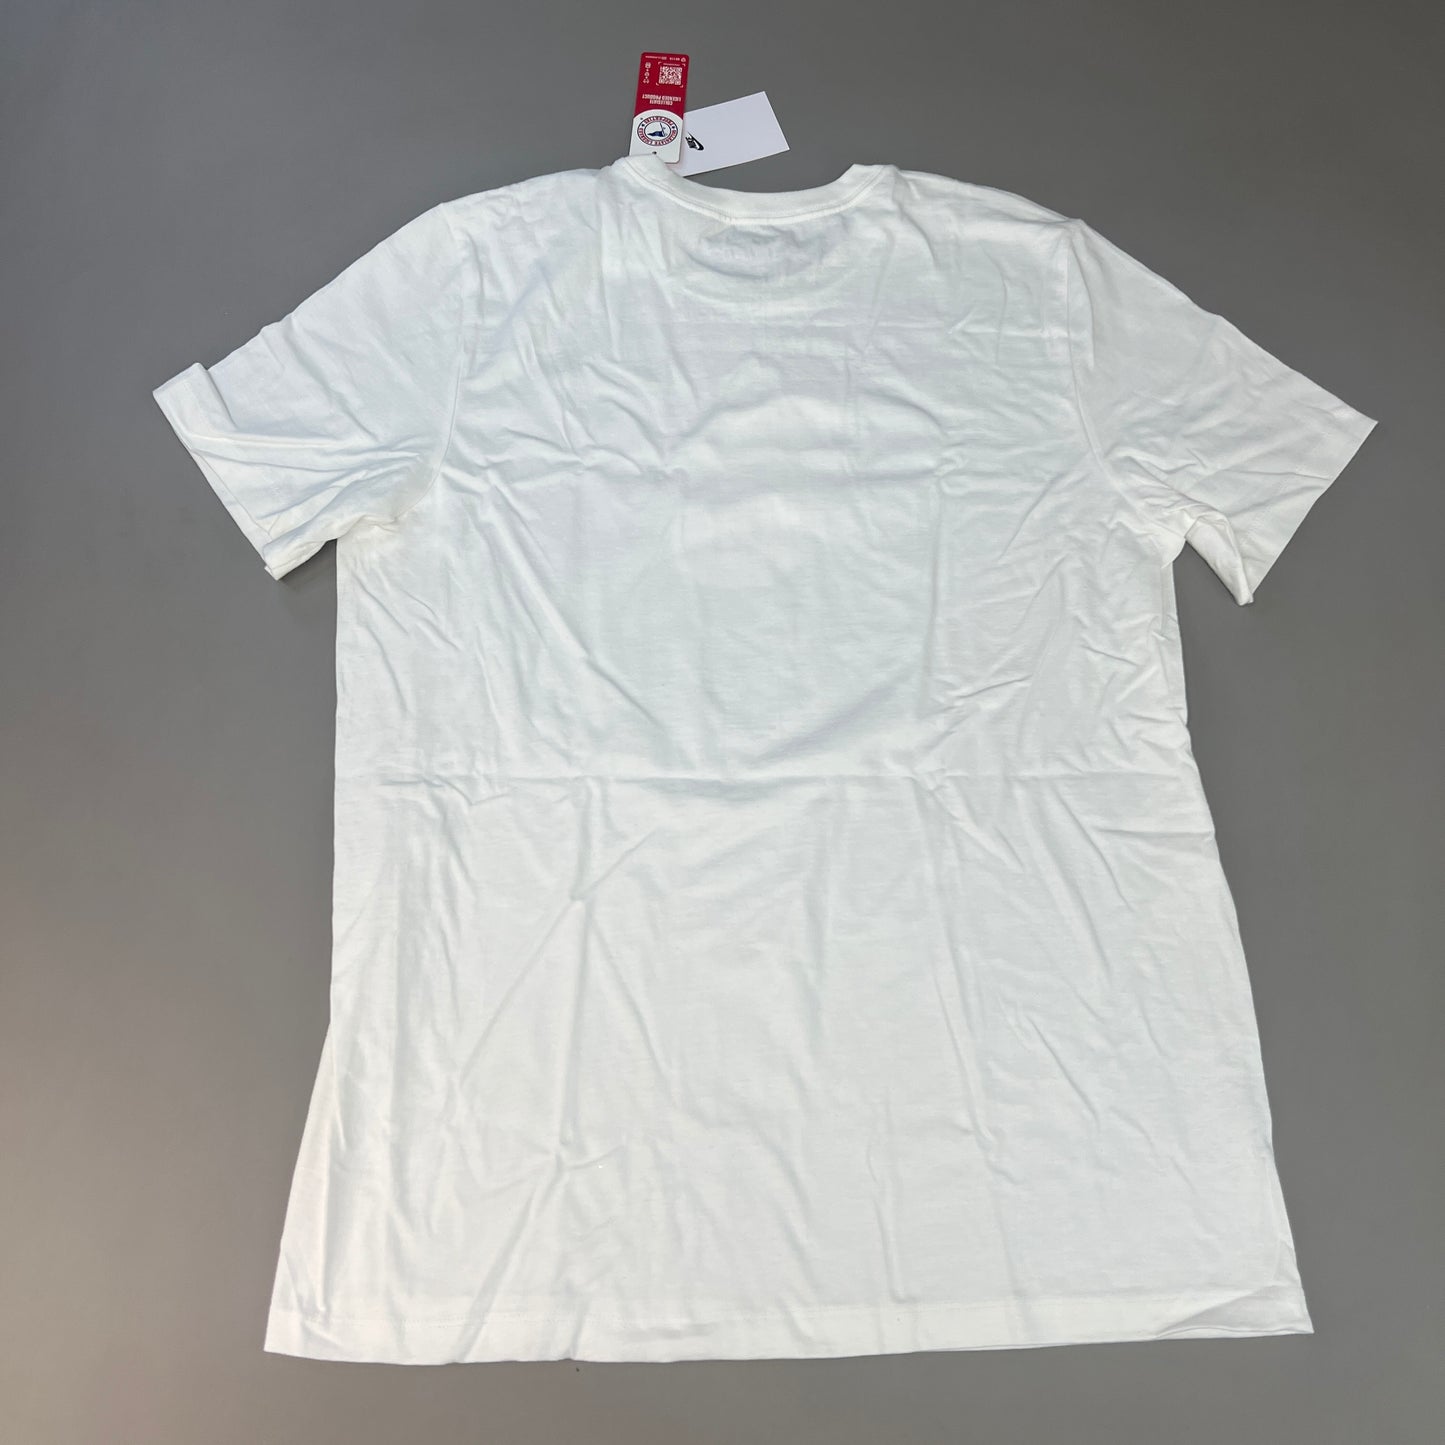 NIKE USC Trojans Essential Logo T-Shirt Men's Sz L White DD7280-100 (New)